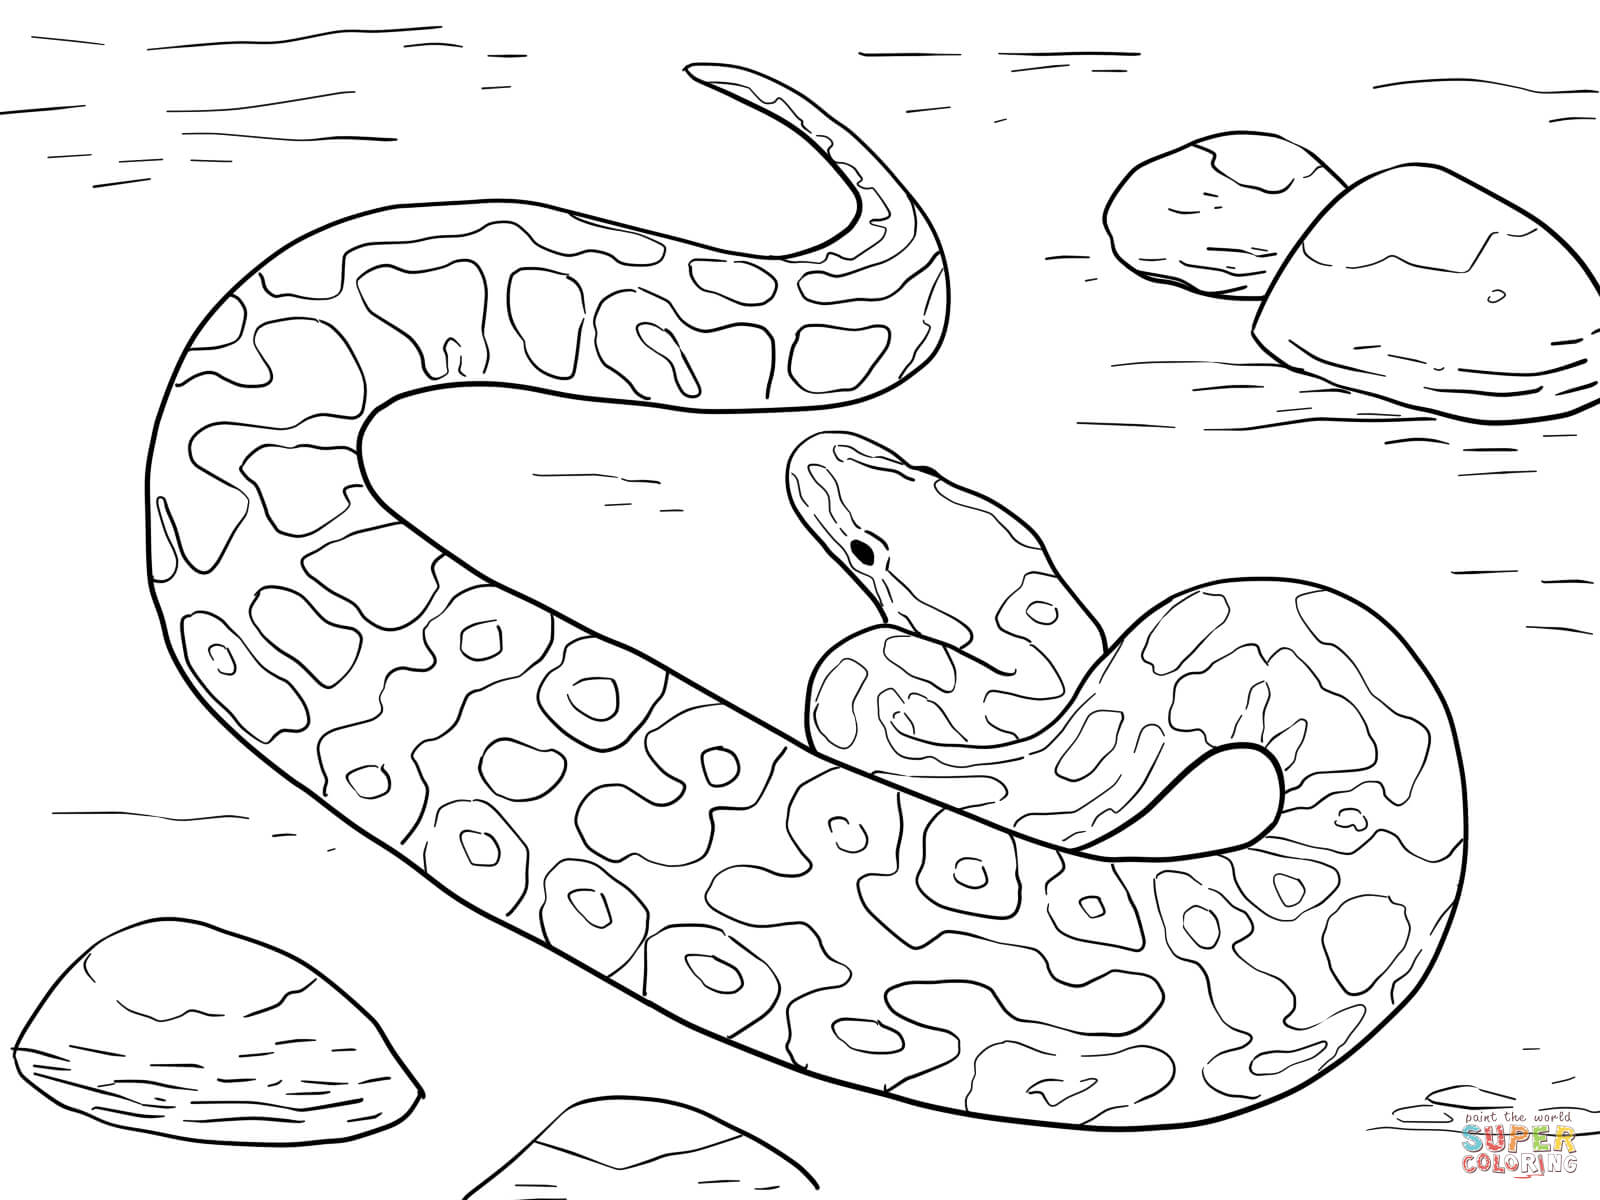 Ball Python coloring #8, Download drawings